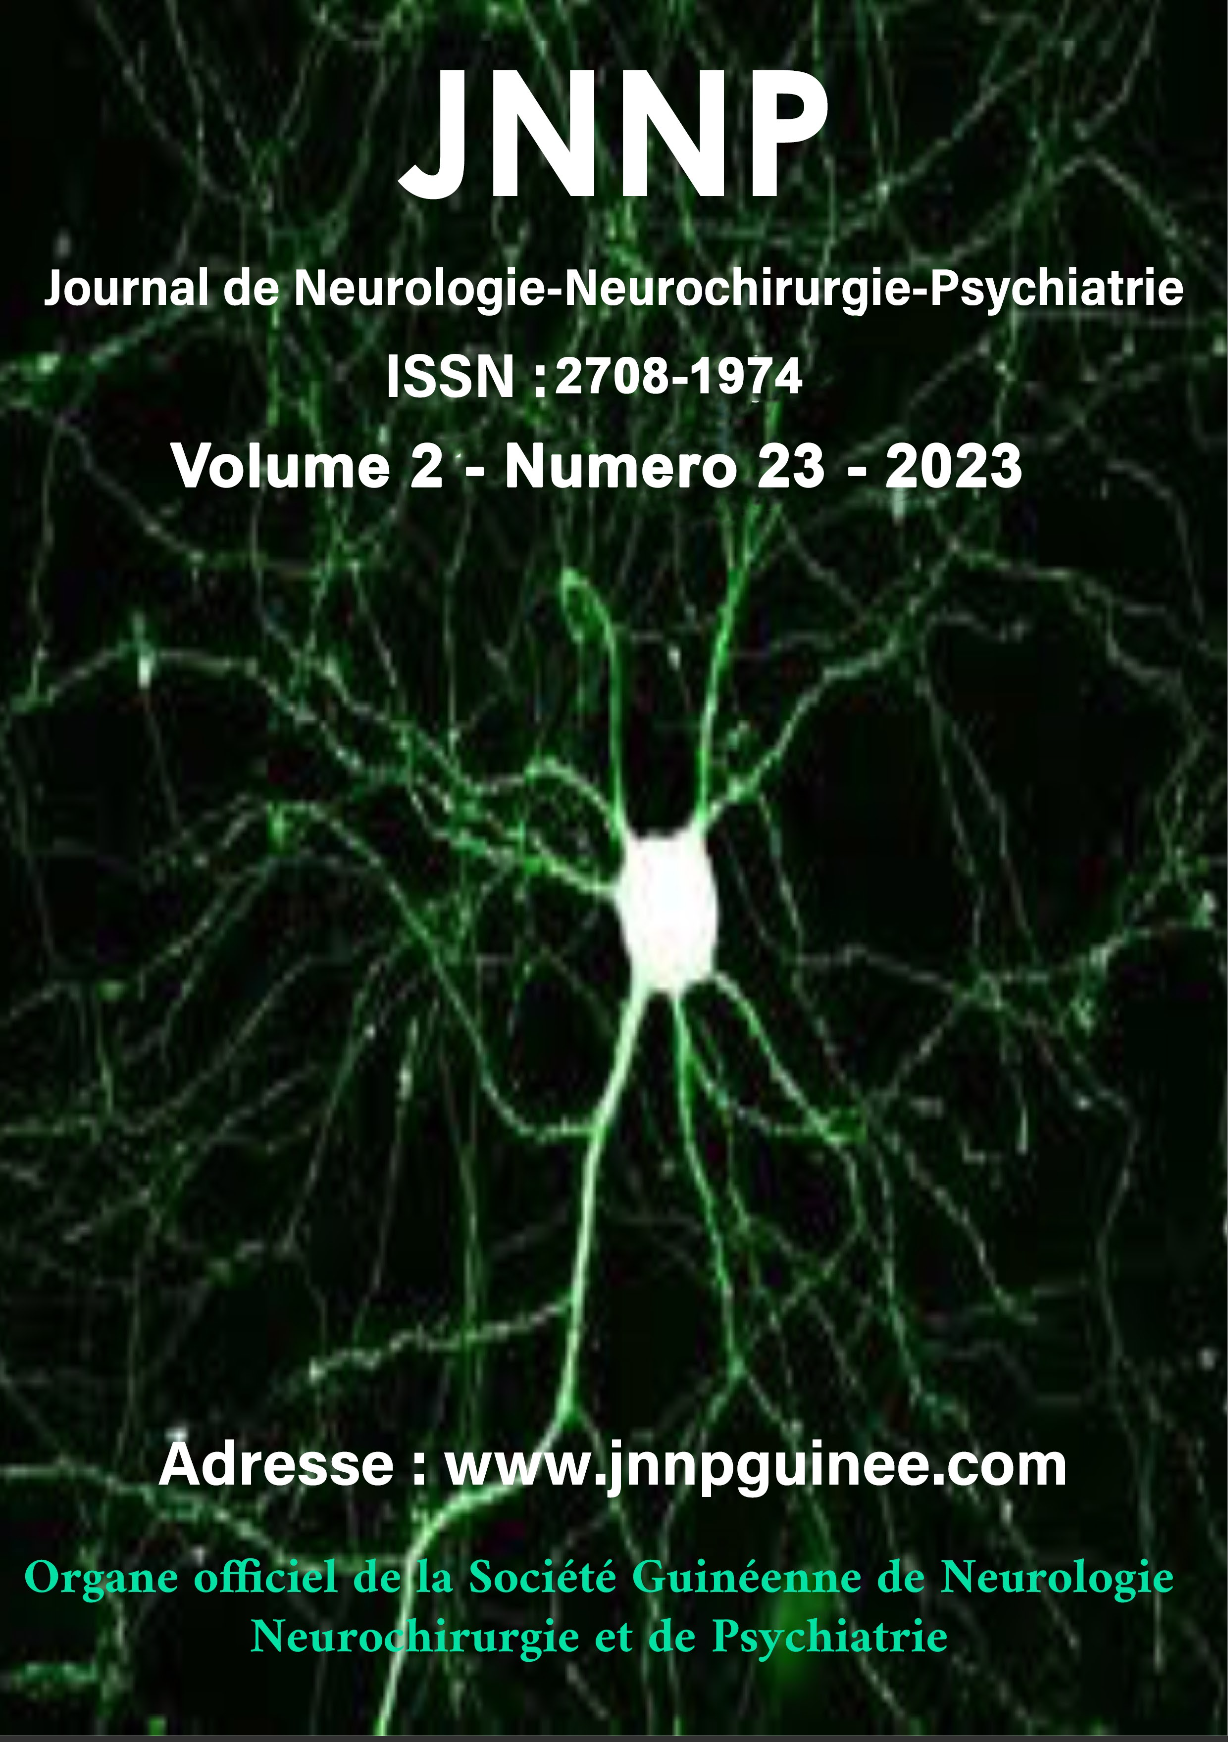 					View Vol. 2 No. 23 (2023): Journal de Neurologie Neurochirurgie et Psychiatrie de Guinée 2023
				